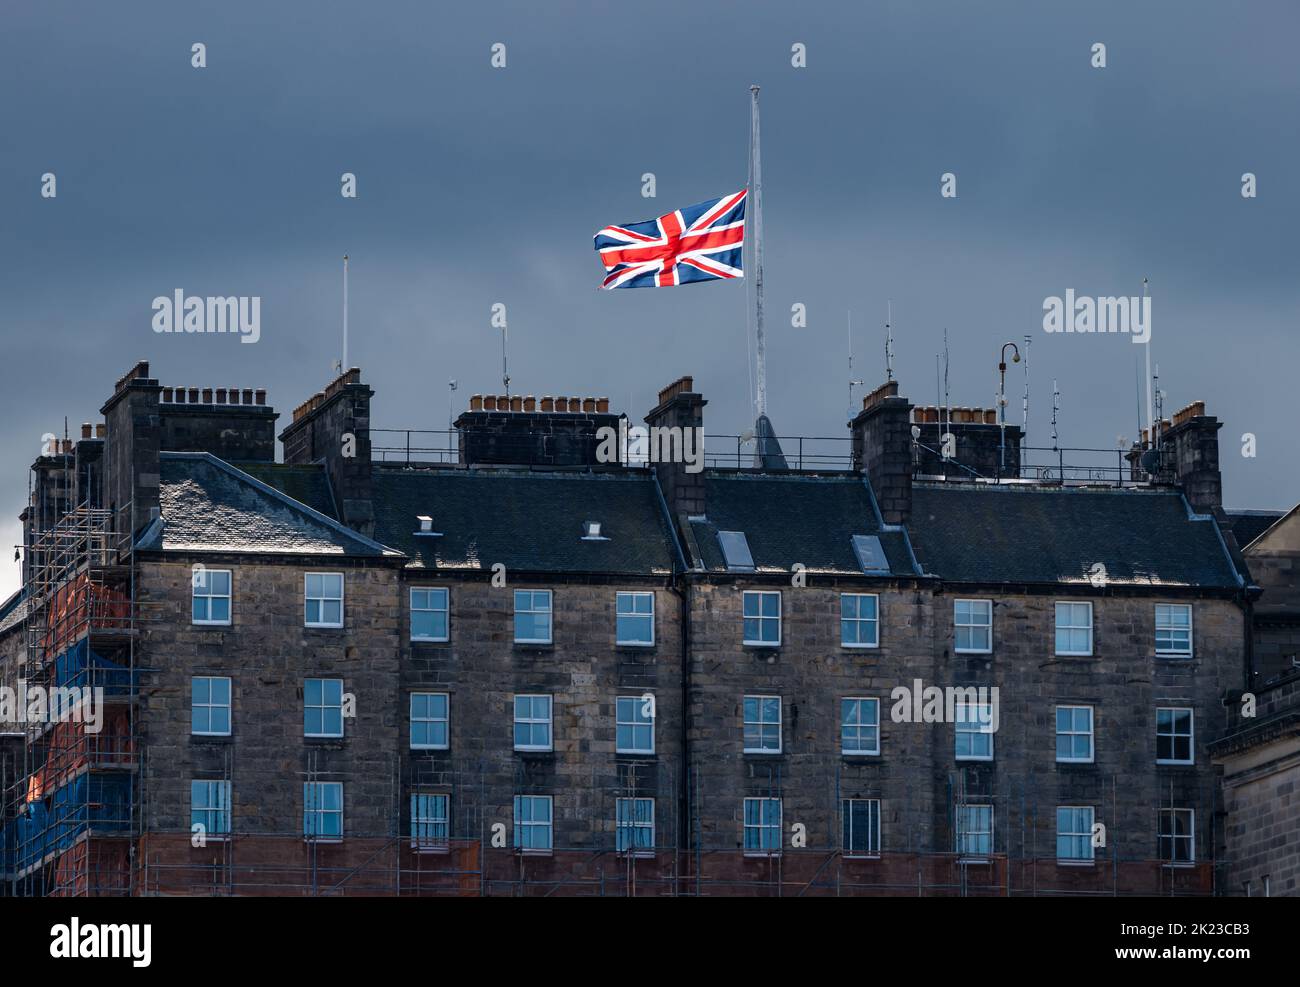 Union Jack flag flying at half mast after death of HM Queen Elizabeth II on Edinburgh city centre tenement rooftop, Scotland, UK Stock Photo